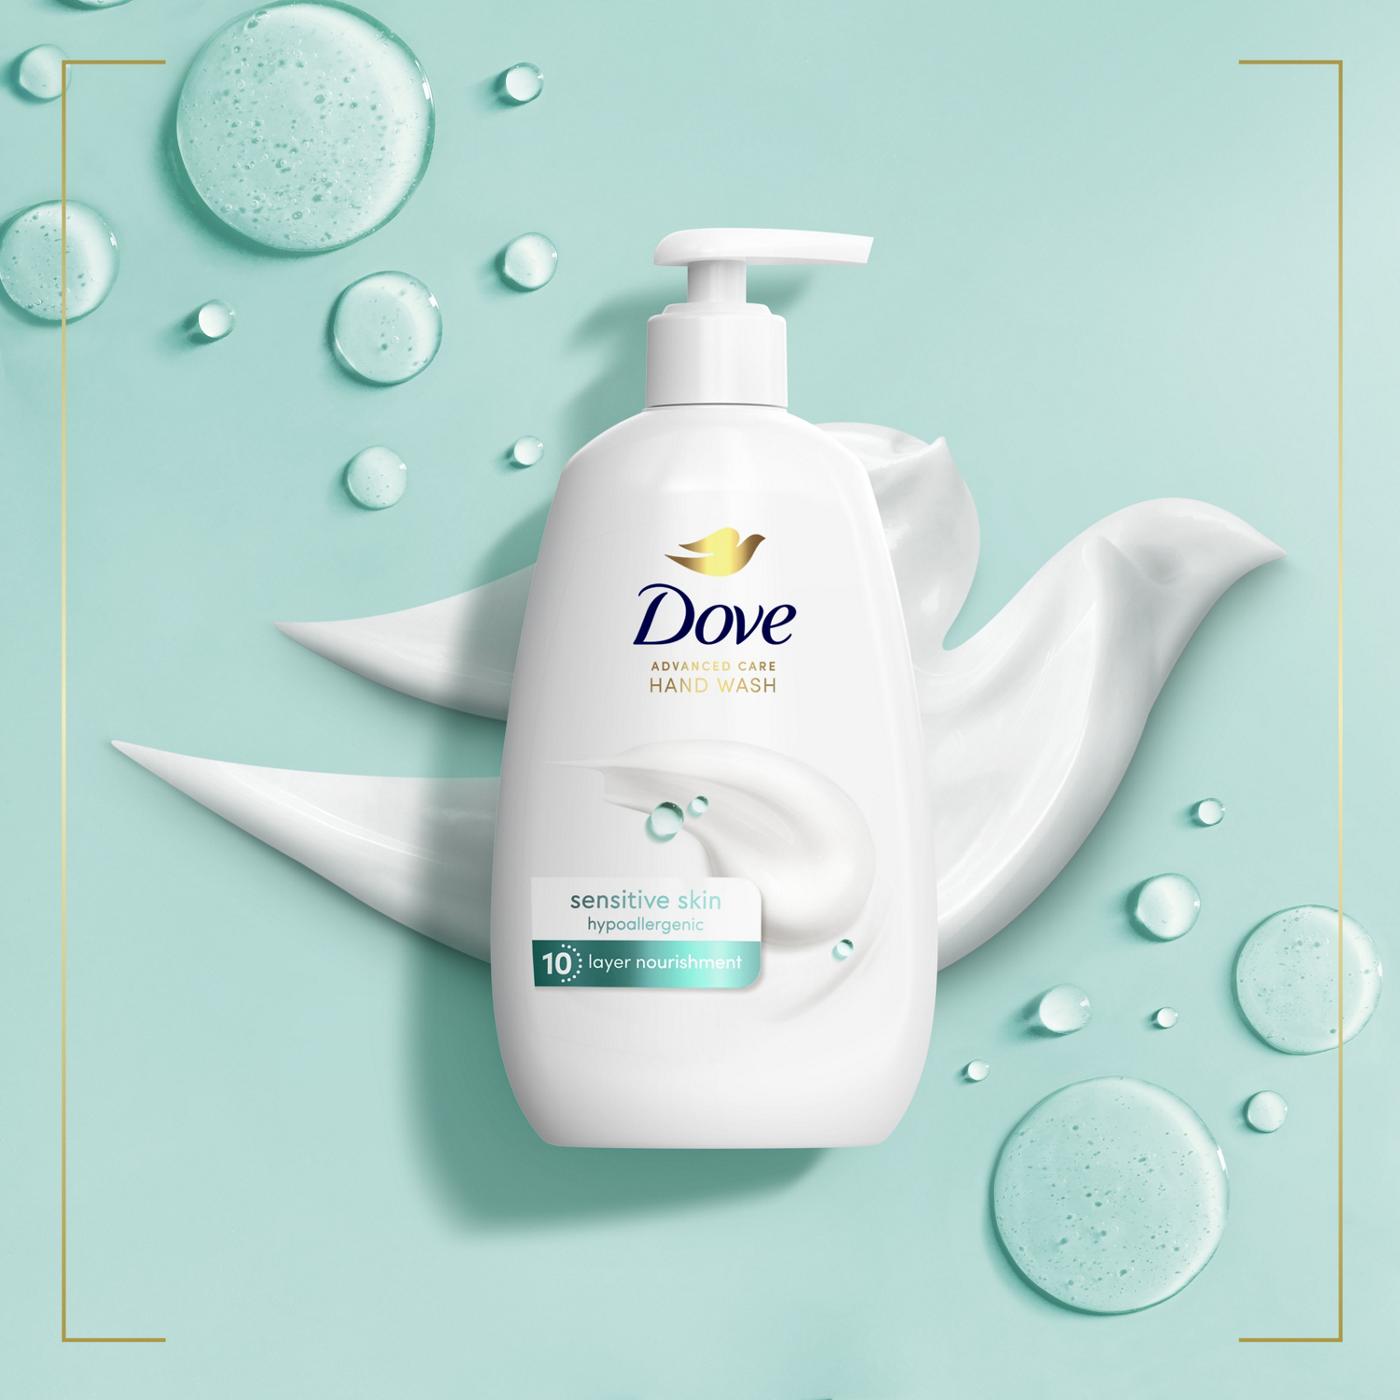 Dove Advanced Care Sensitive Skin Hand Wash; image 7 of 9